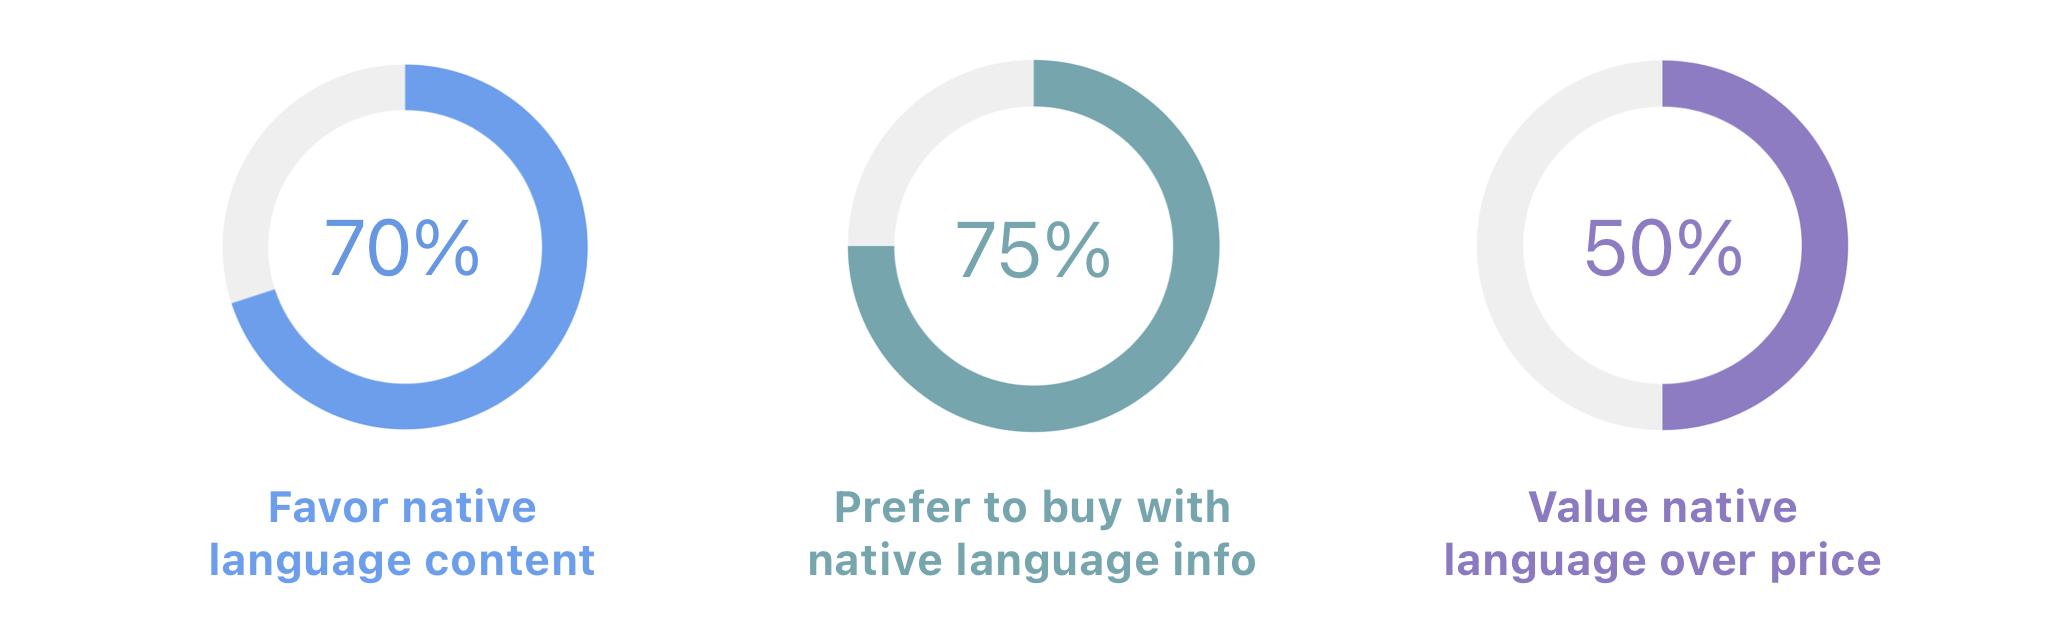 Consumer Language Preference Statistics (Source)